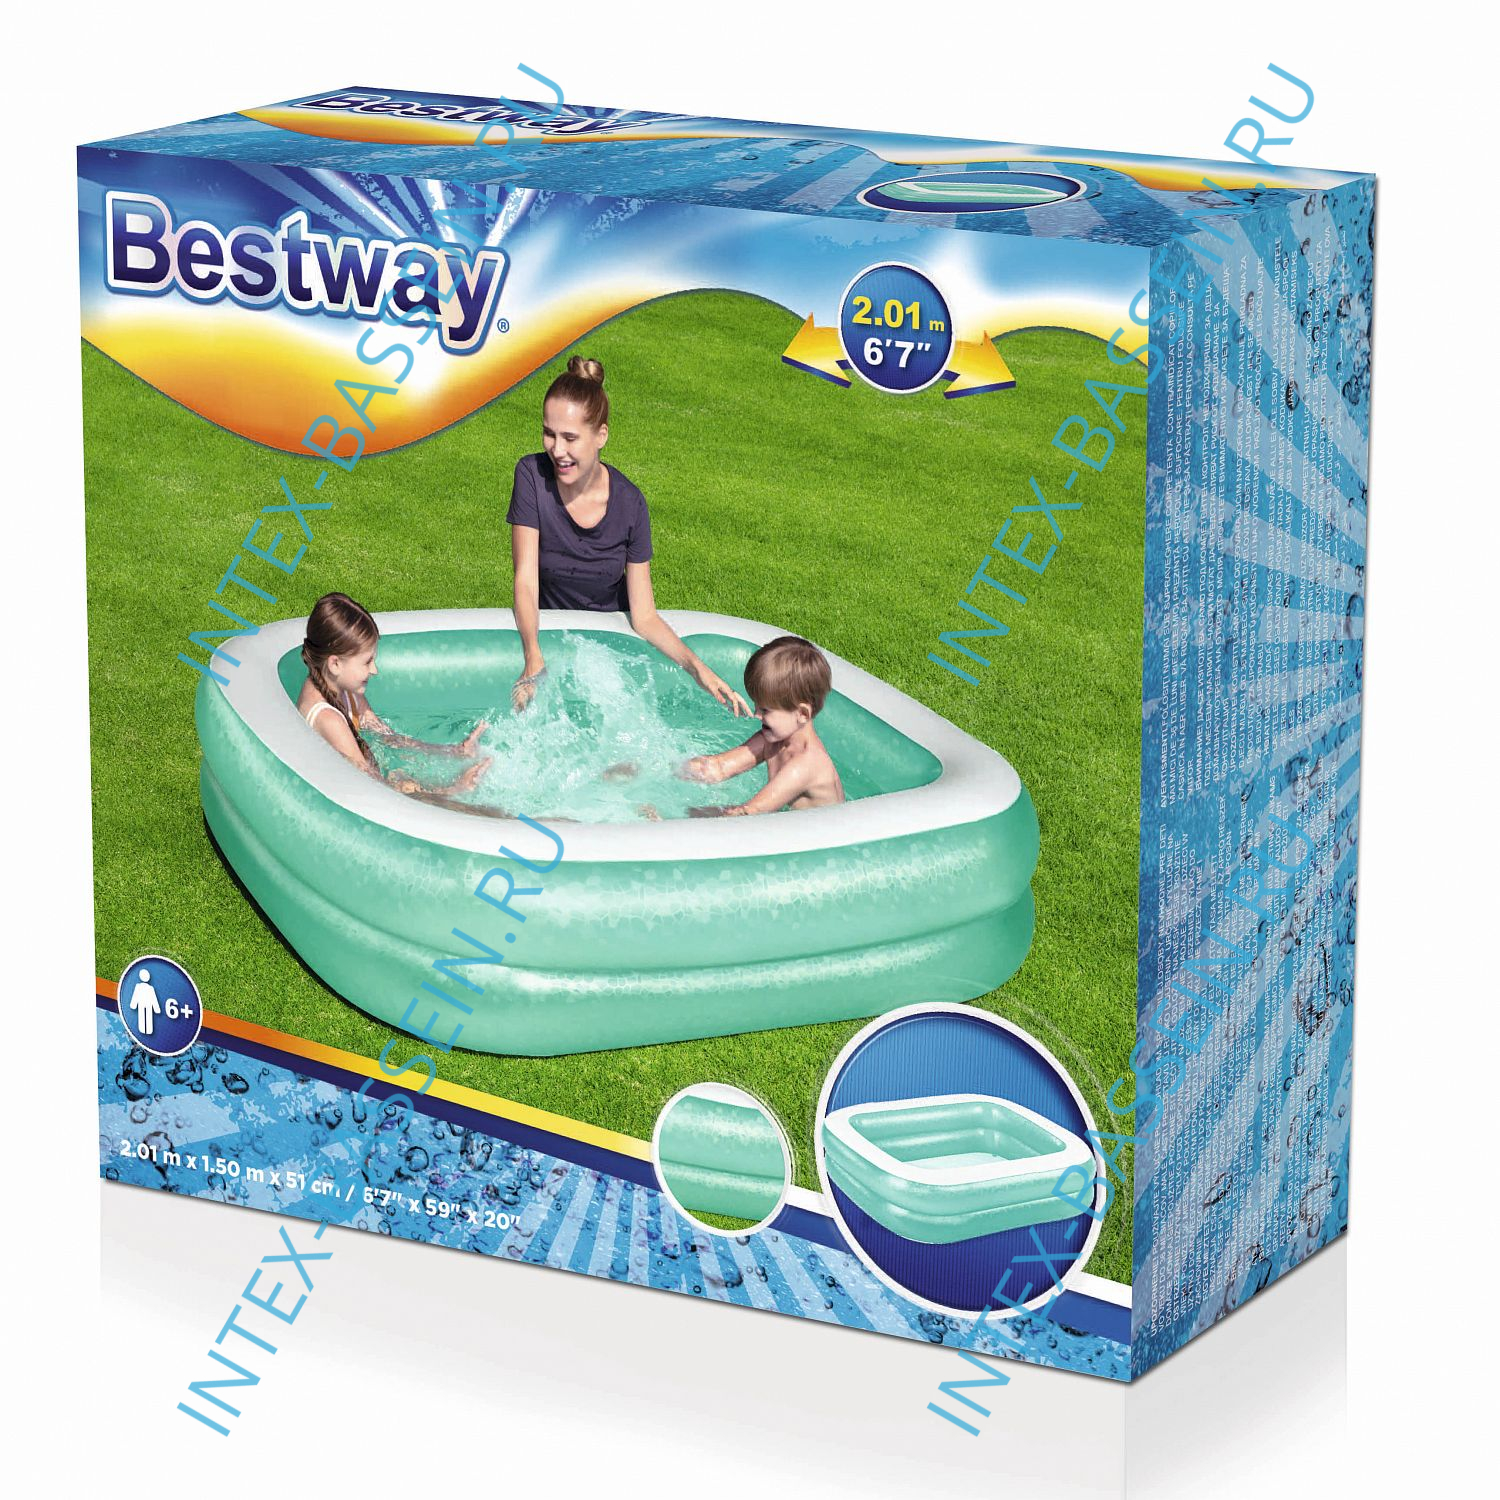 Детский надувной бассейн Bestway 2.01 x 1.5 x 0.51 м, артикул 54005